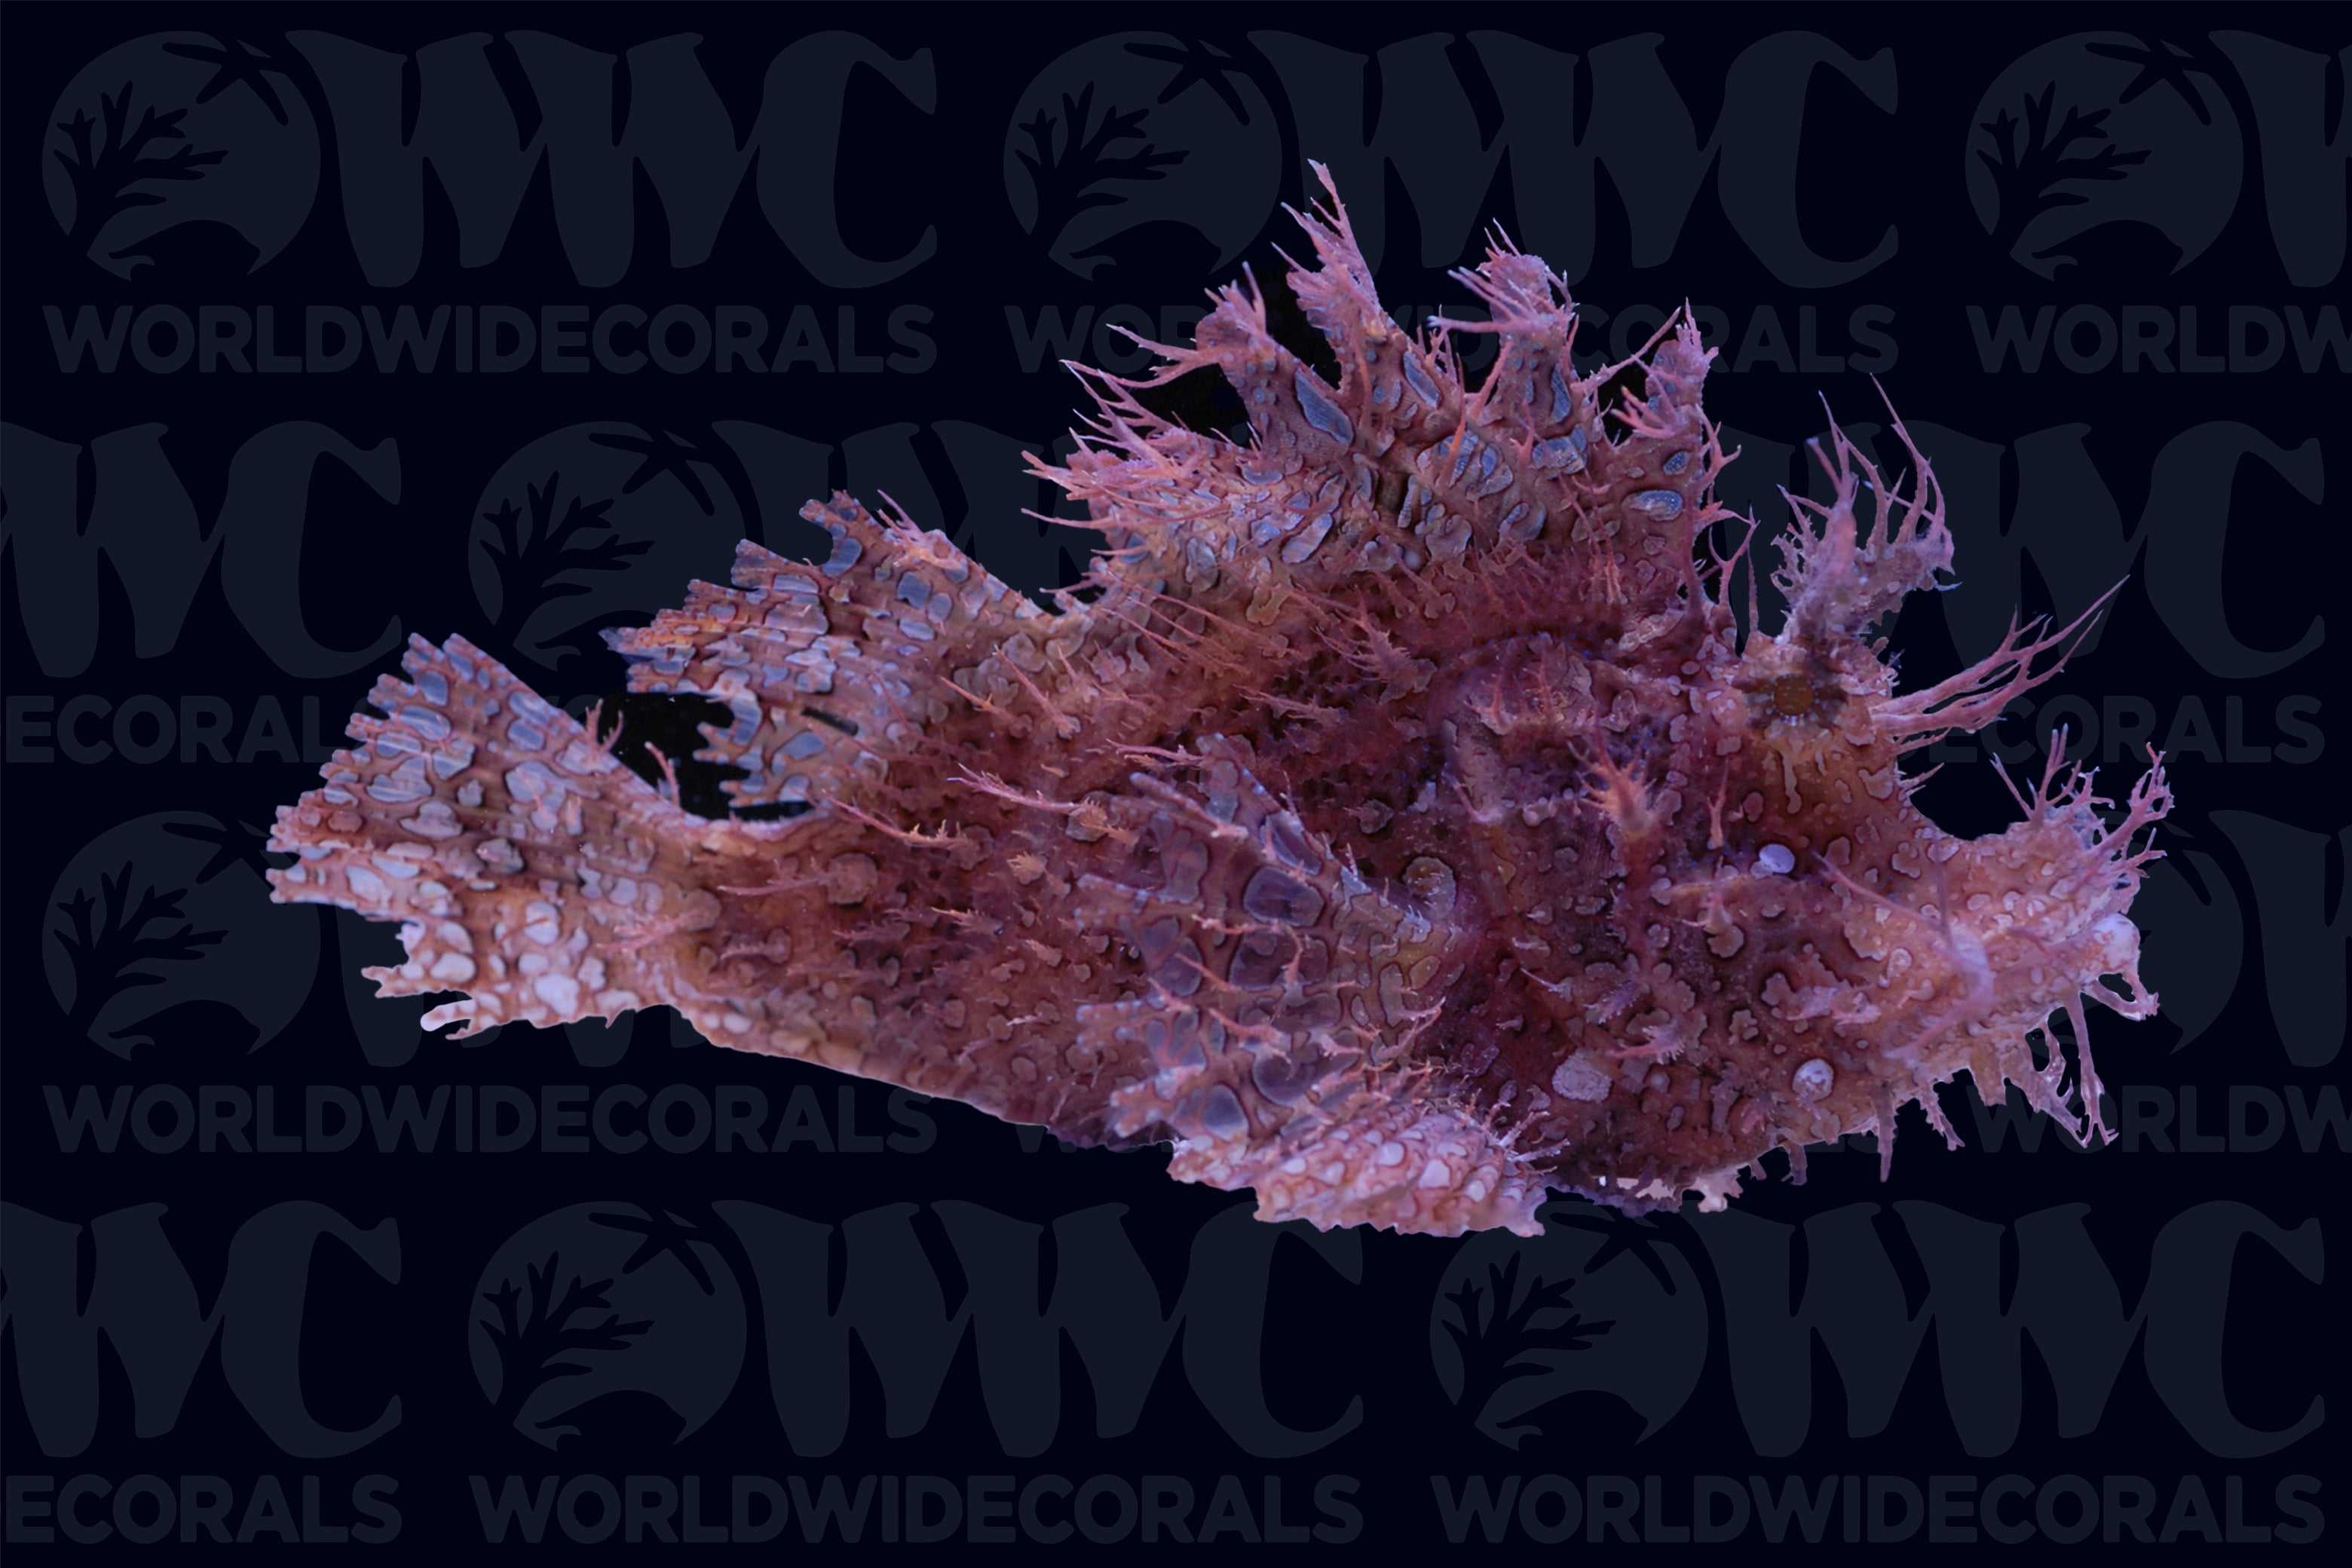 Purple/Red Frilly Rhinopias Scorpions - Philippines